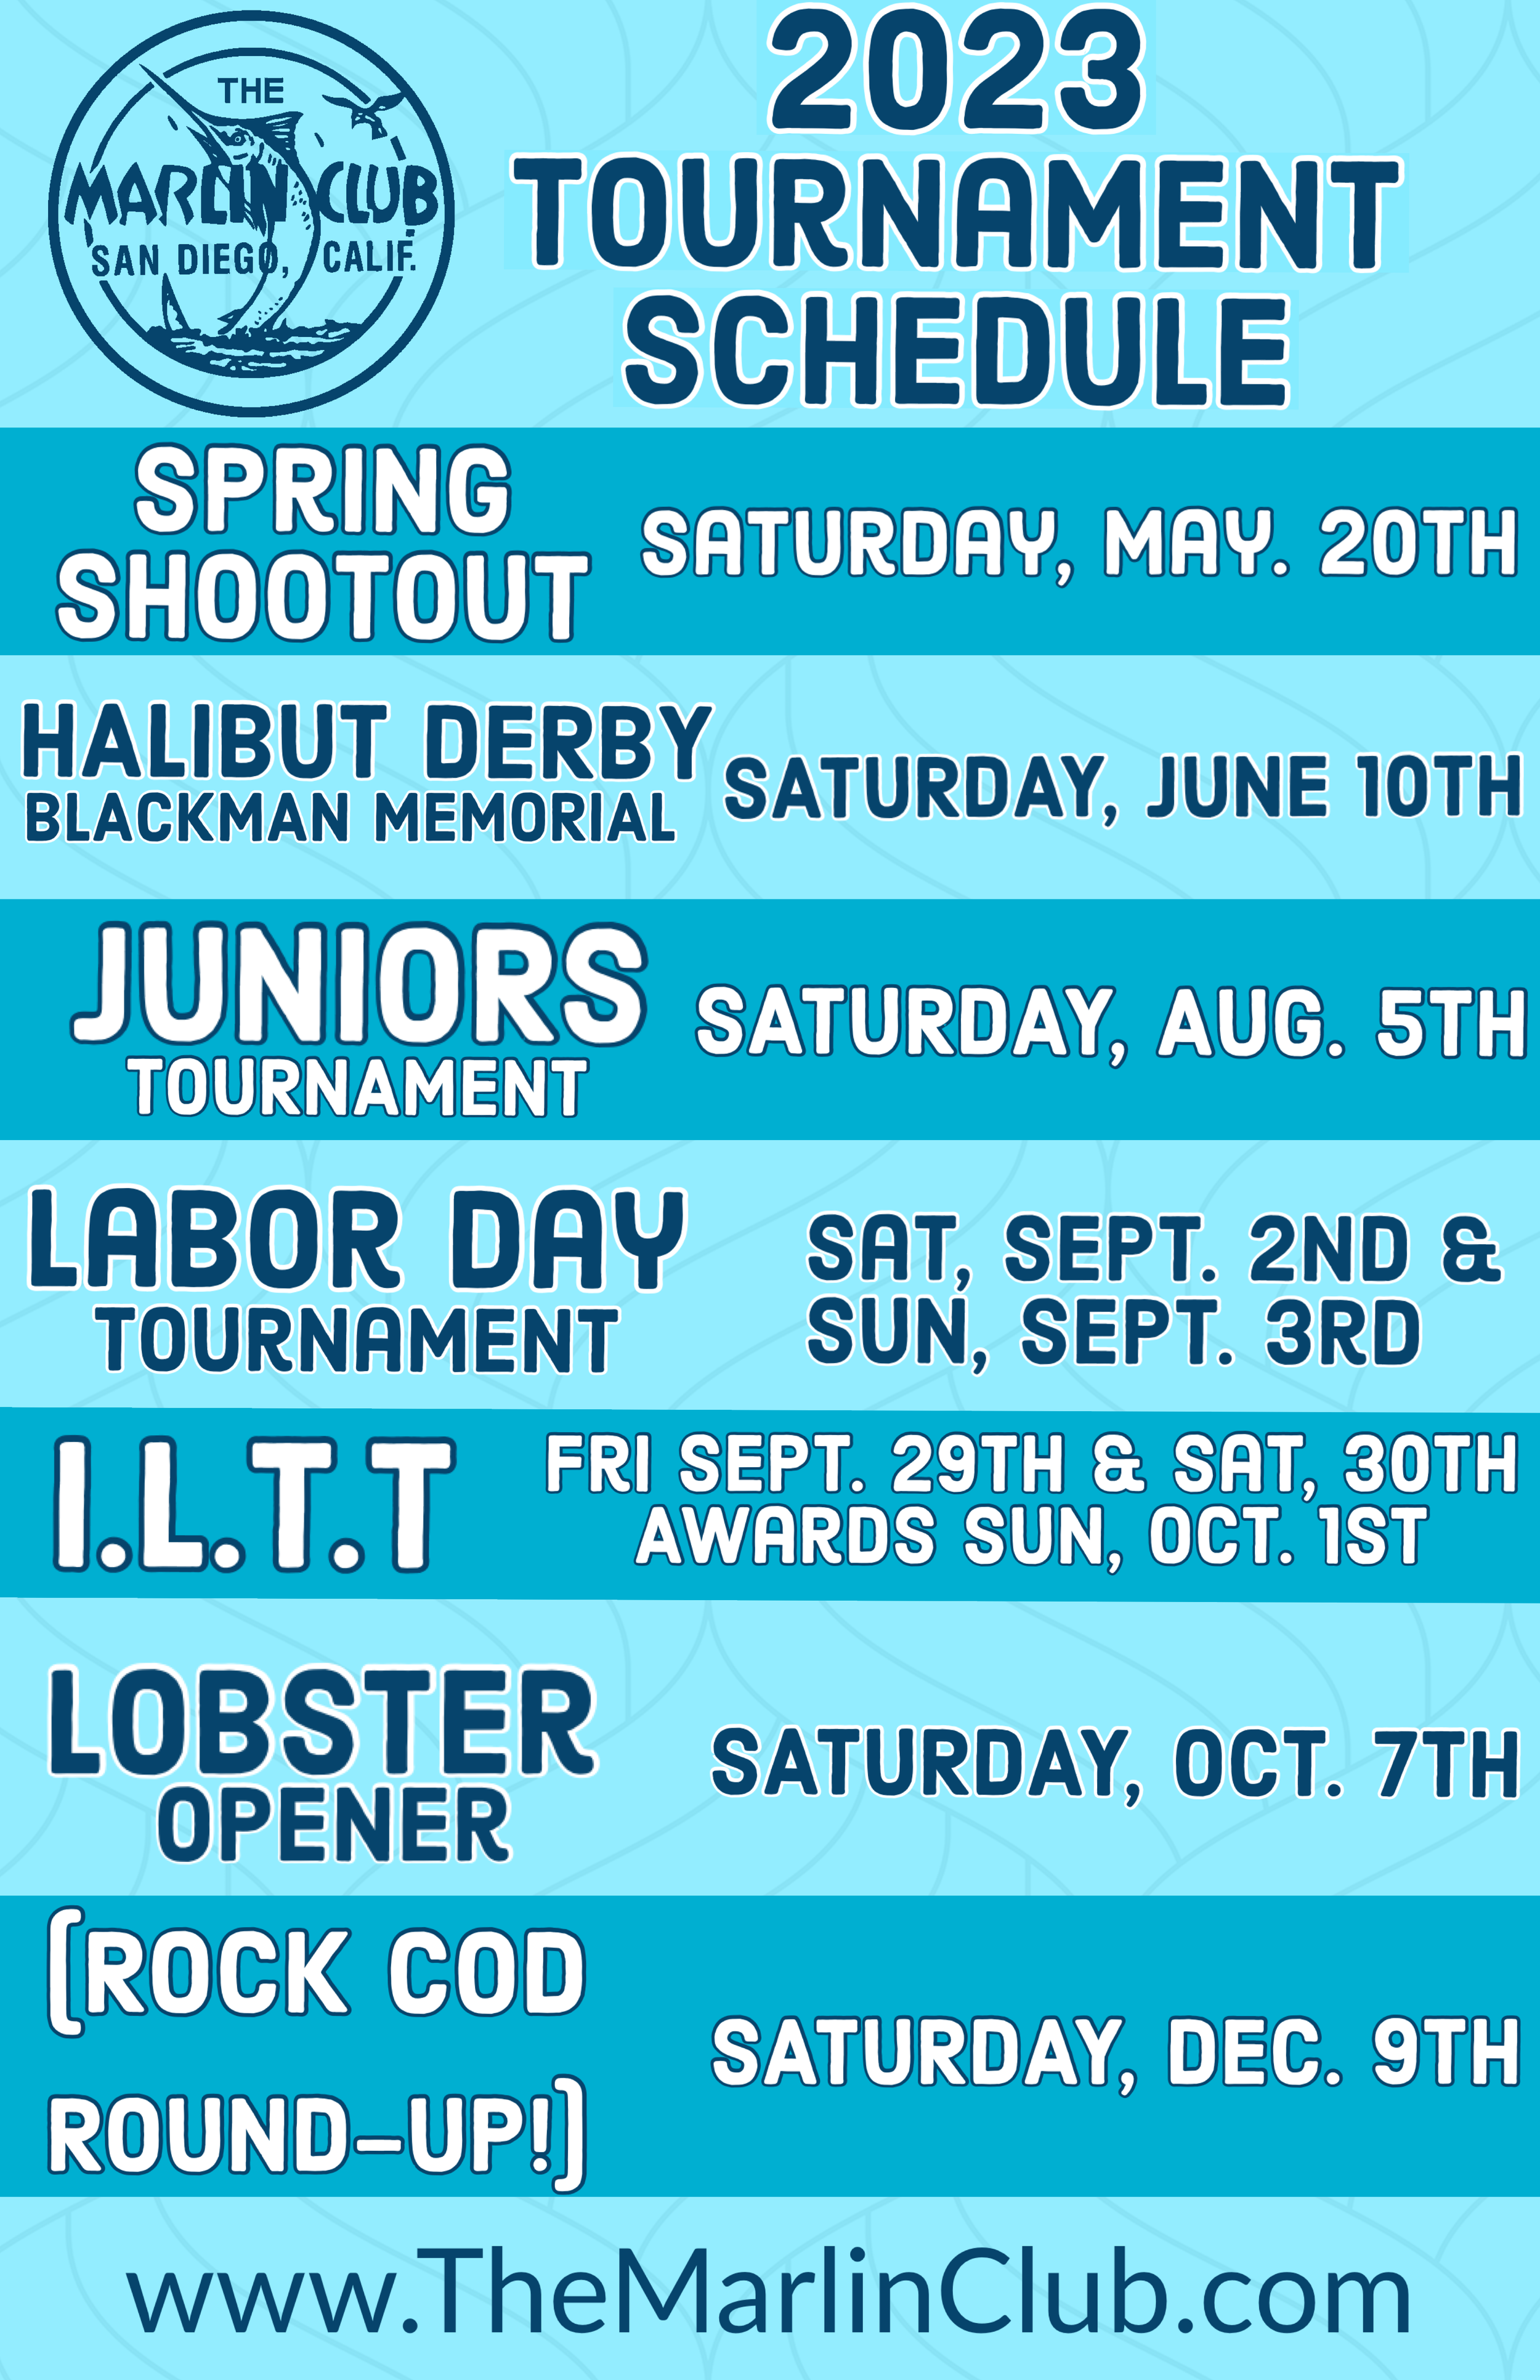 Official Tournament Schedule